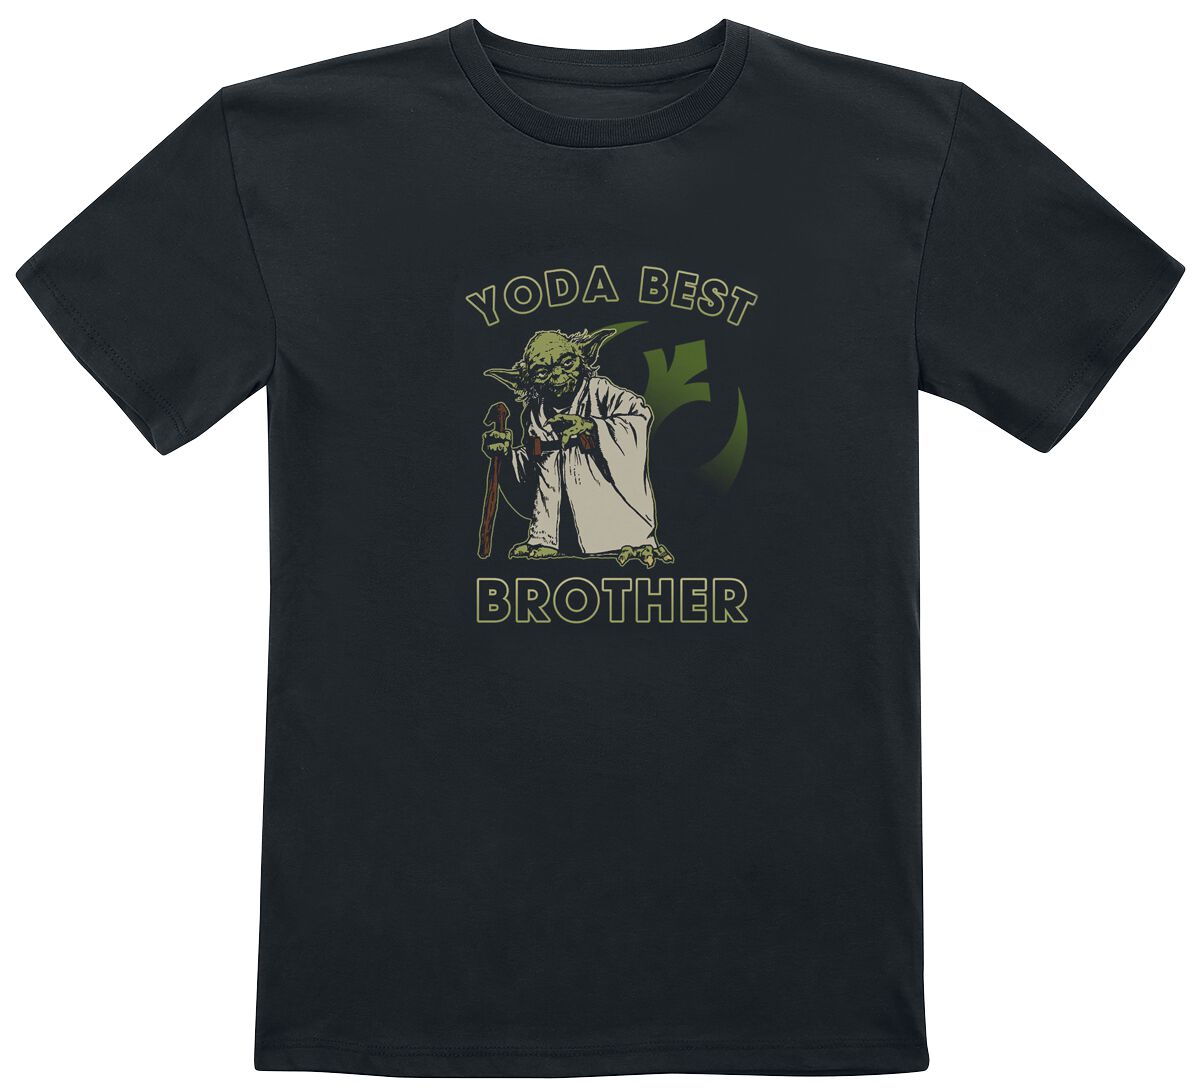 Star Wars Kids - Yoda Best Brother T-Shirt black